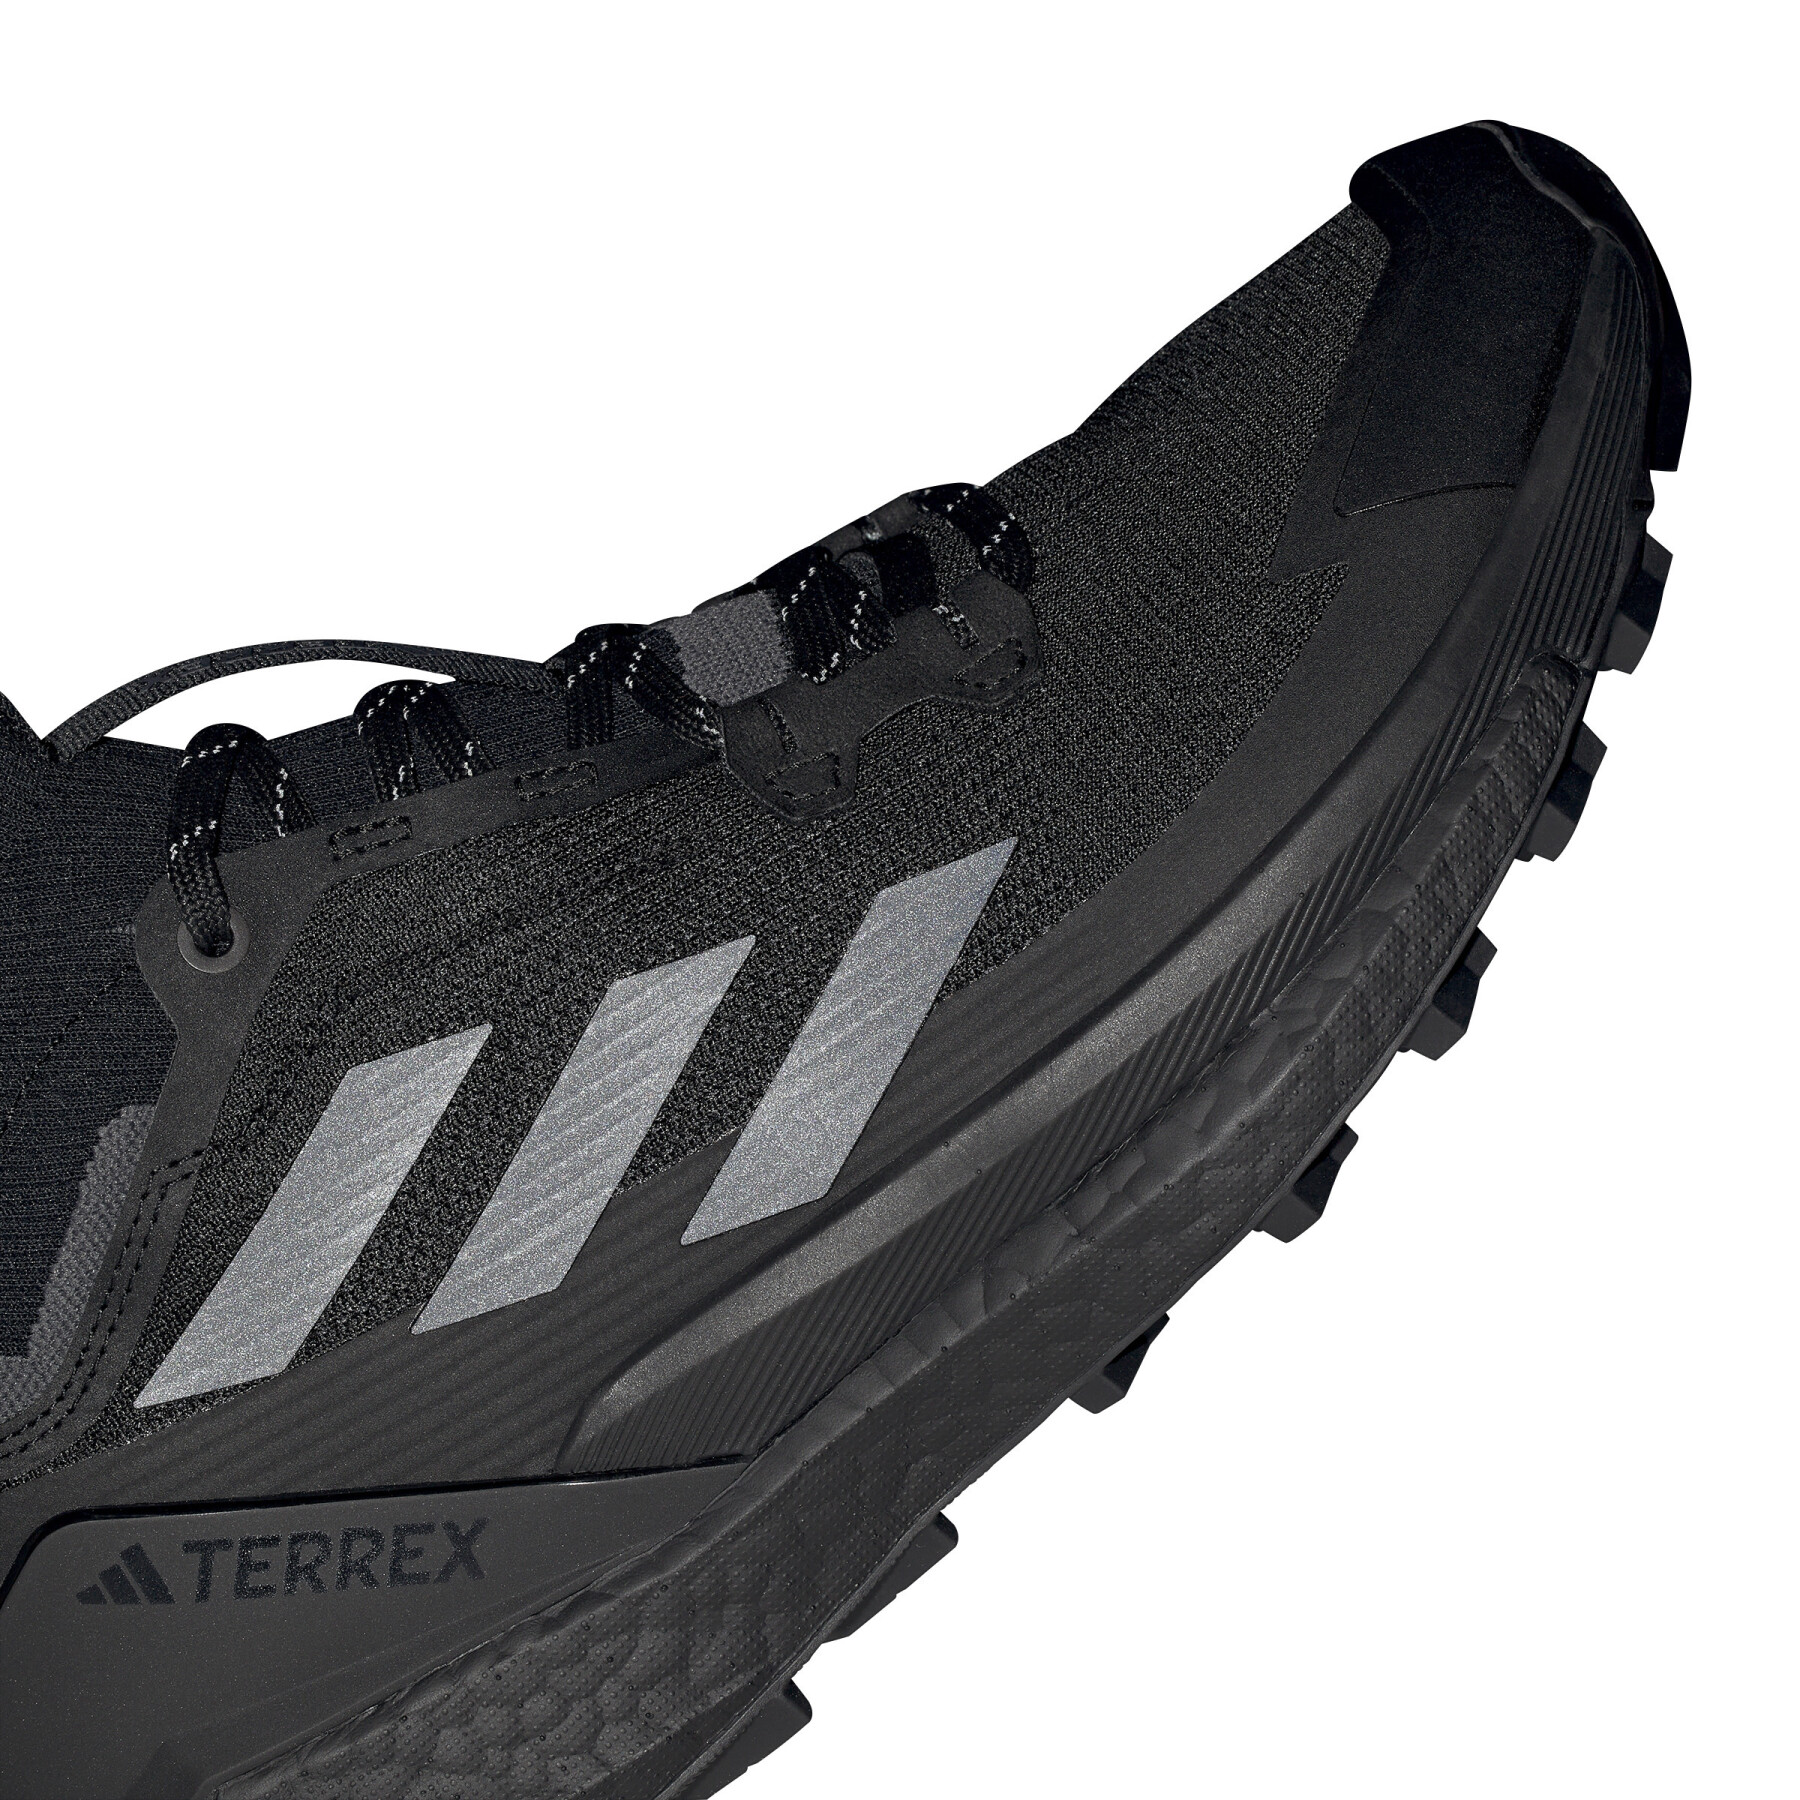 Hiking shoes adidas Terrex Free Hiker 2.0